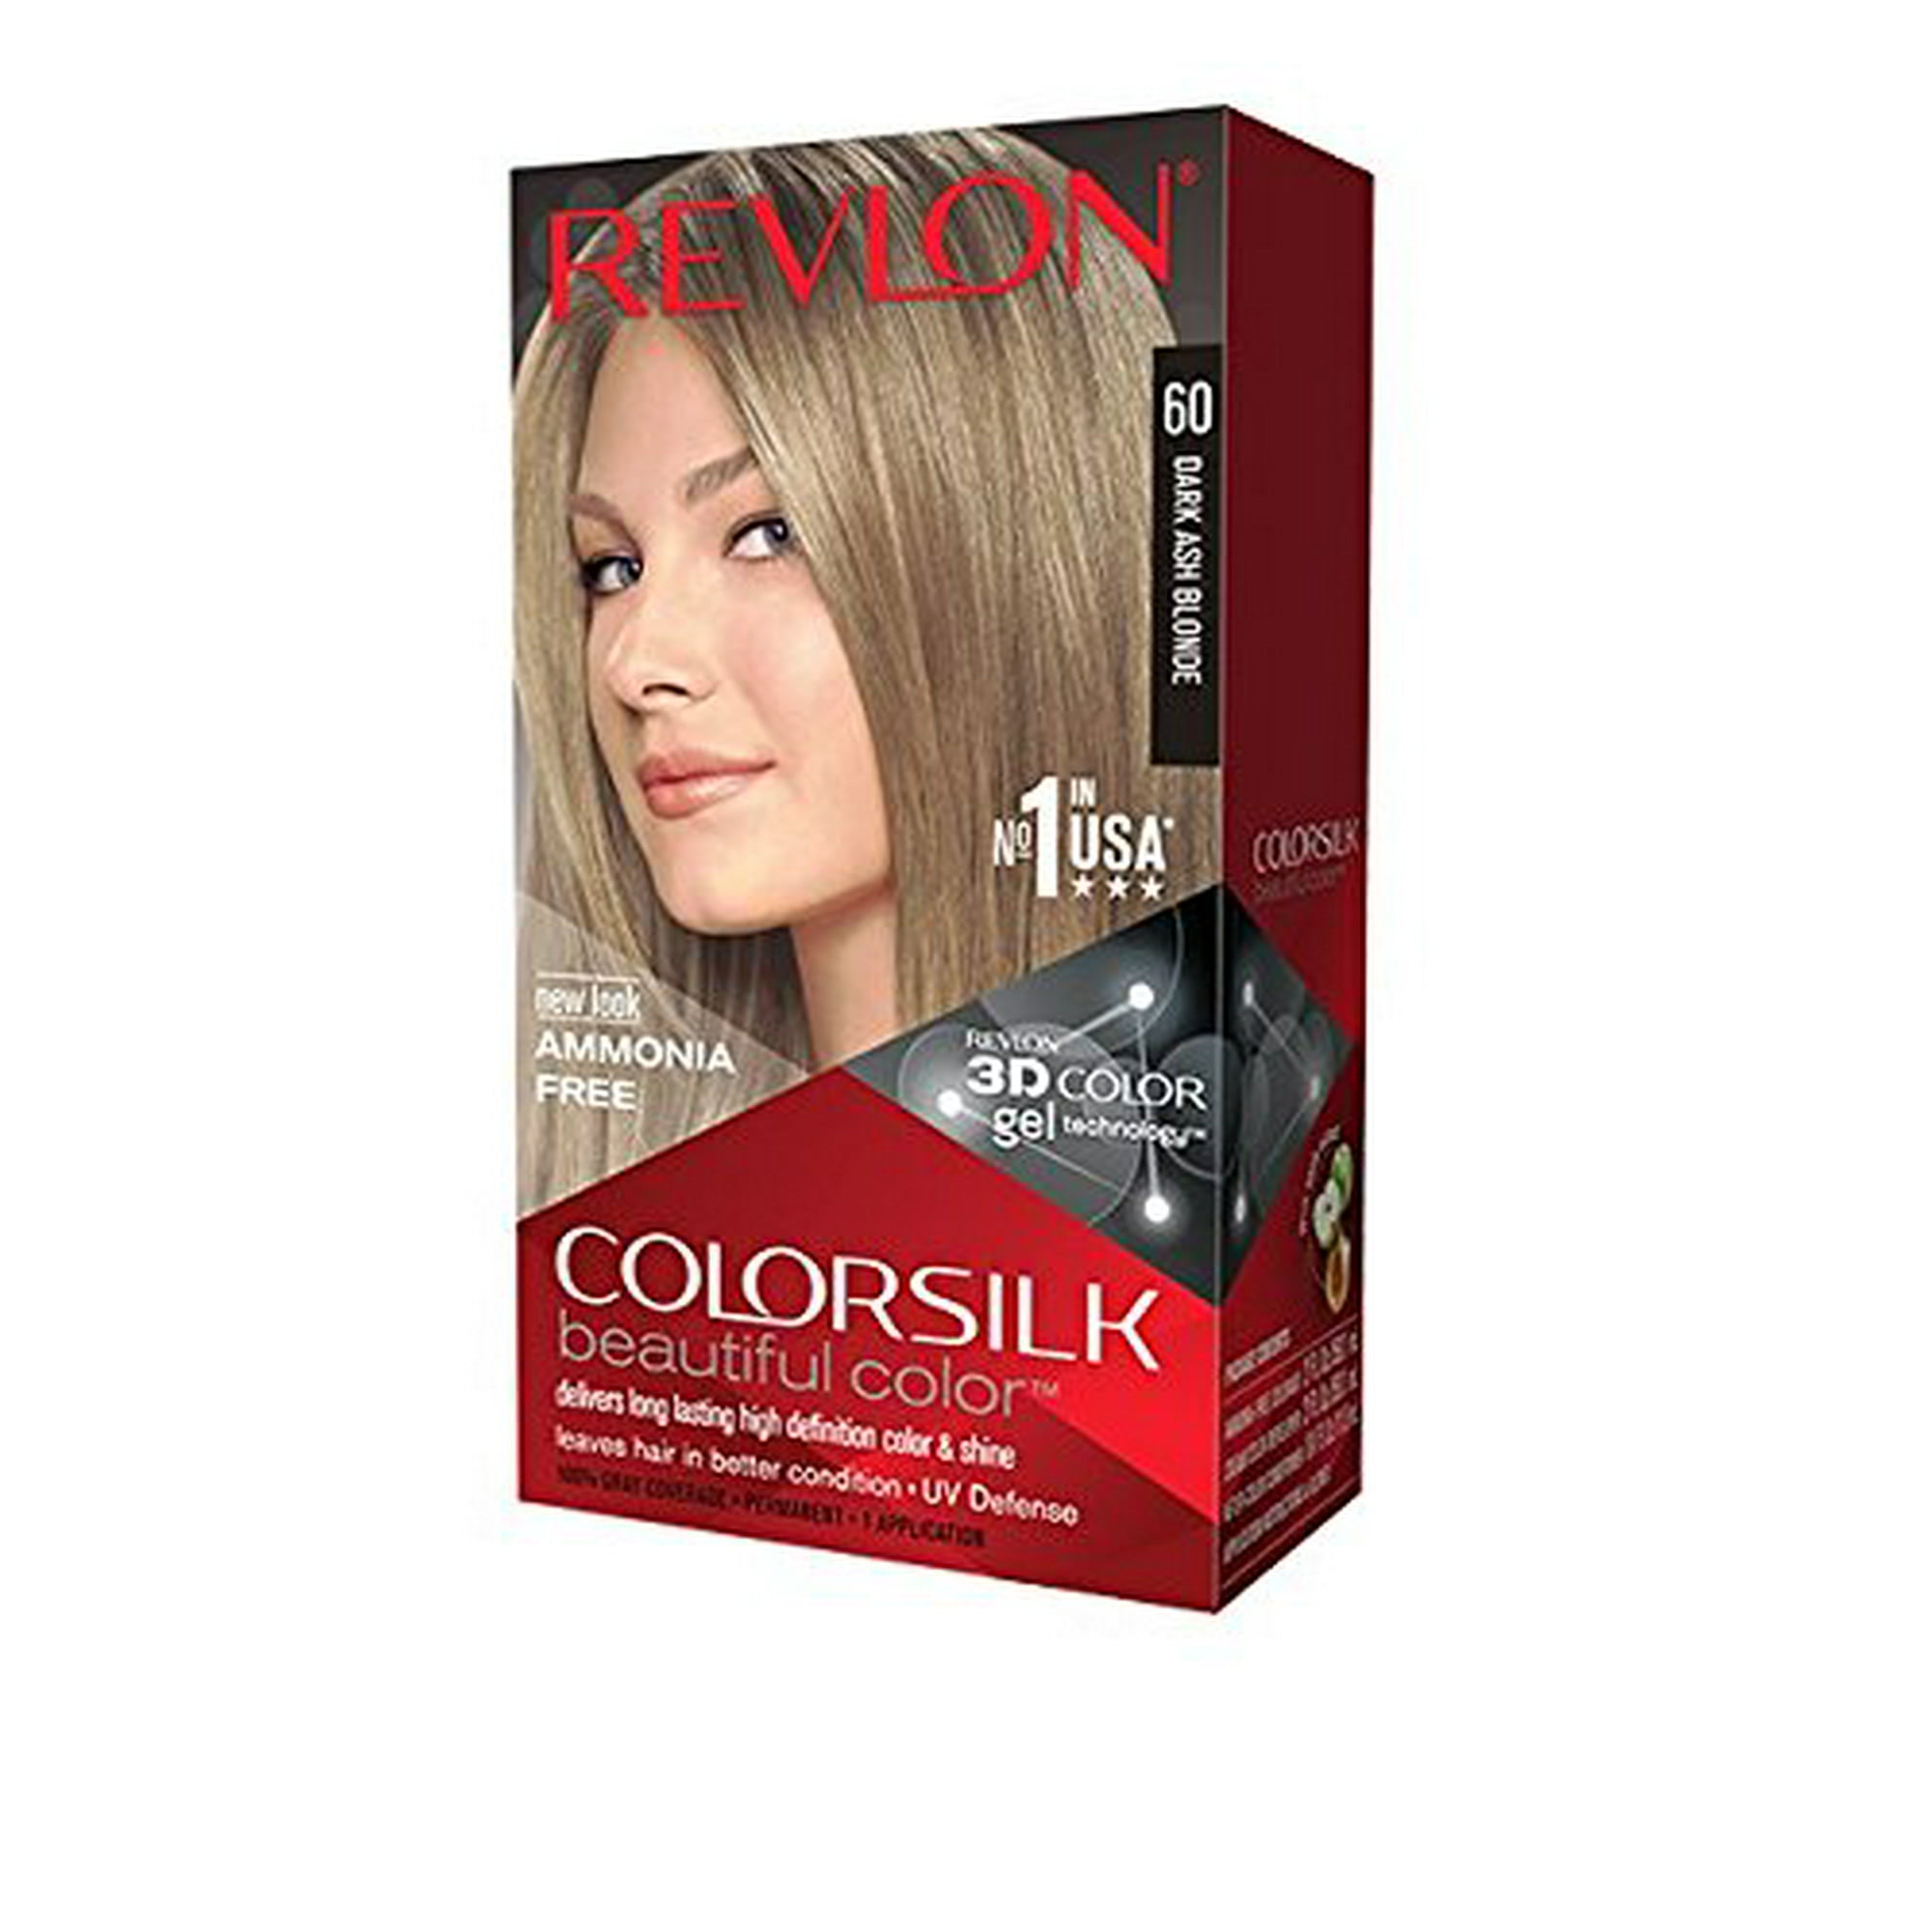 Revlon Colorsilk Beautiful Color Dark Ash Blonde